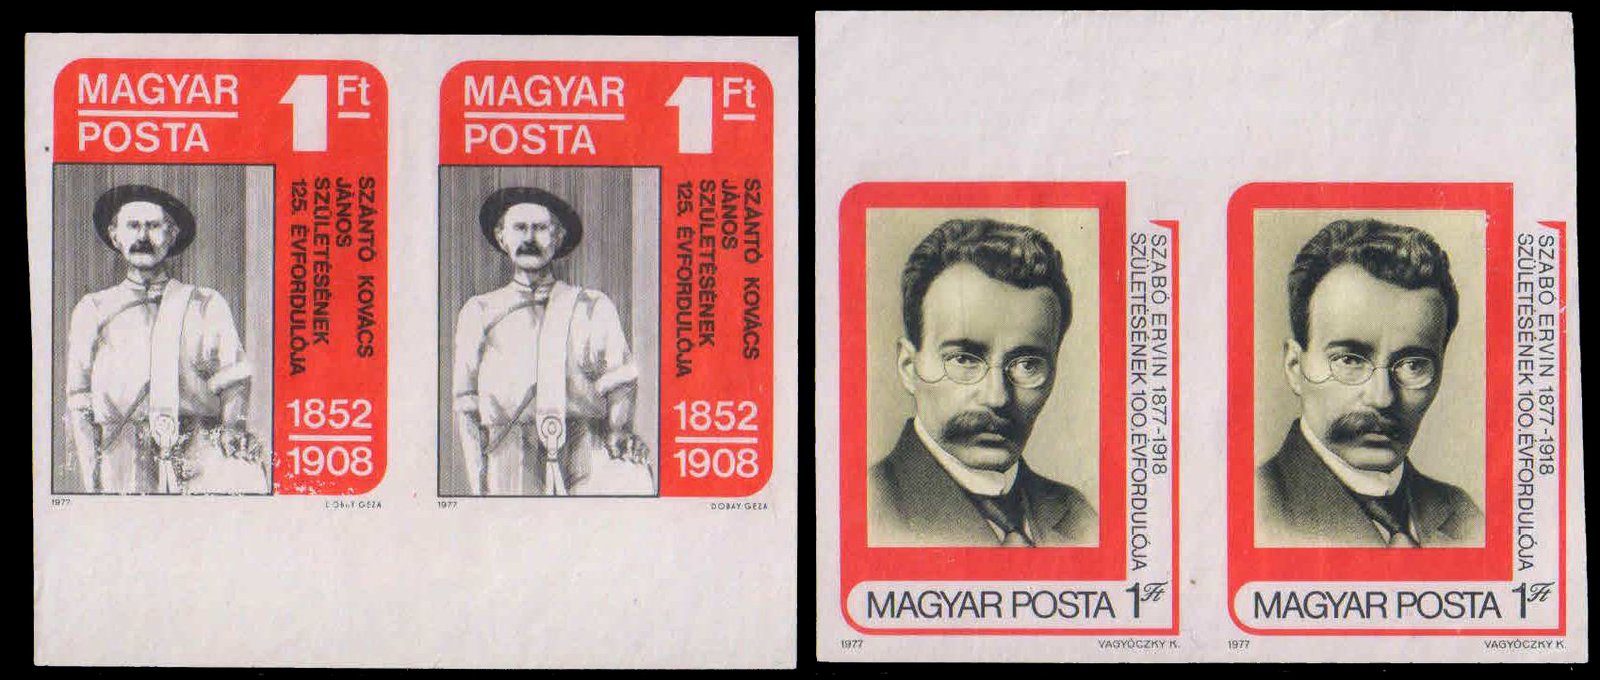 HUNGARY 1977-Ervin Szabo & Jam os Szanto Kovacs, 2 Different Imperf Pairs, Mint G/W